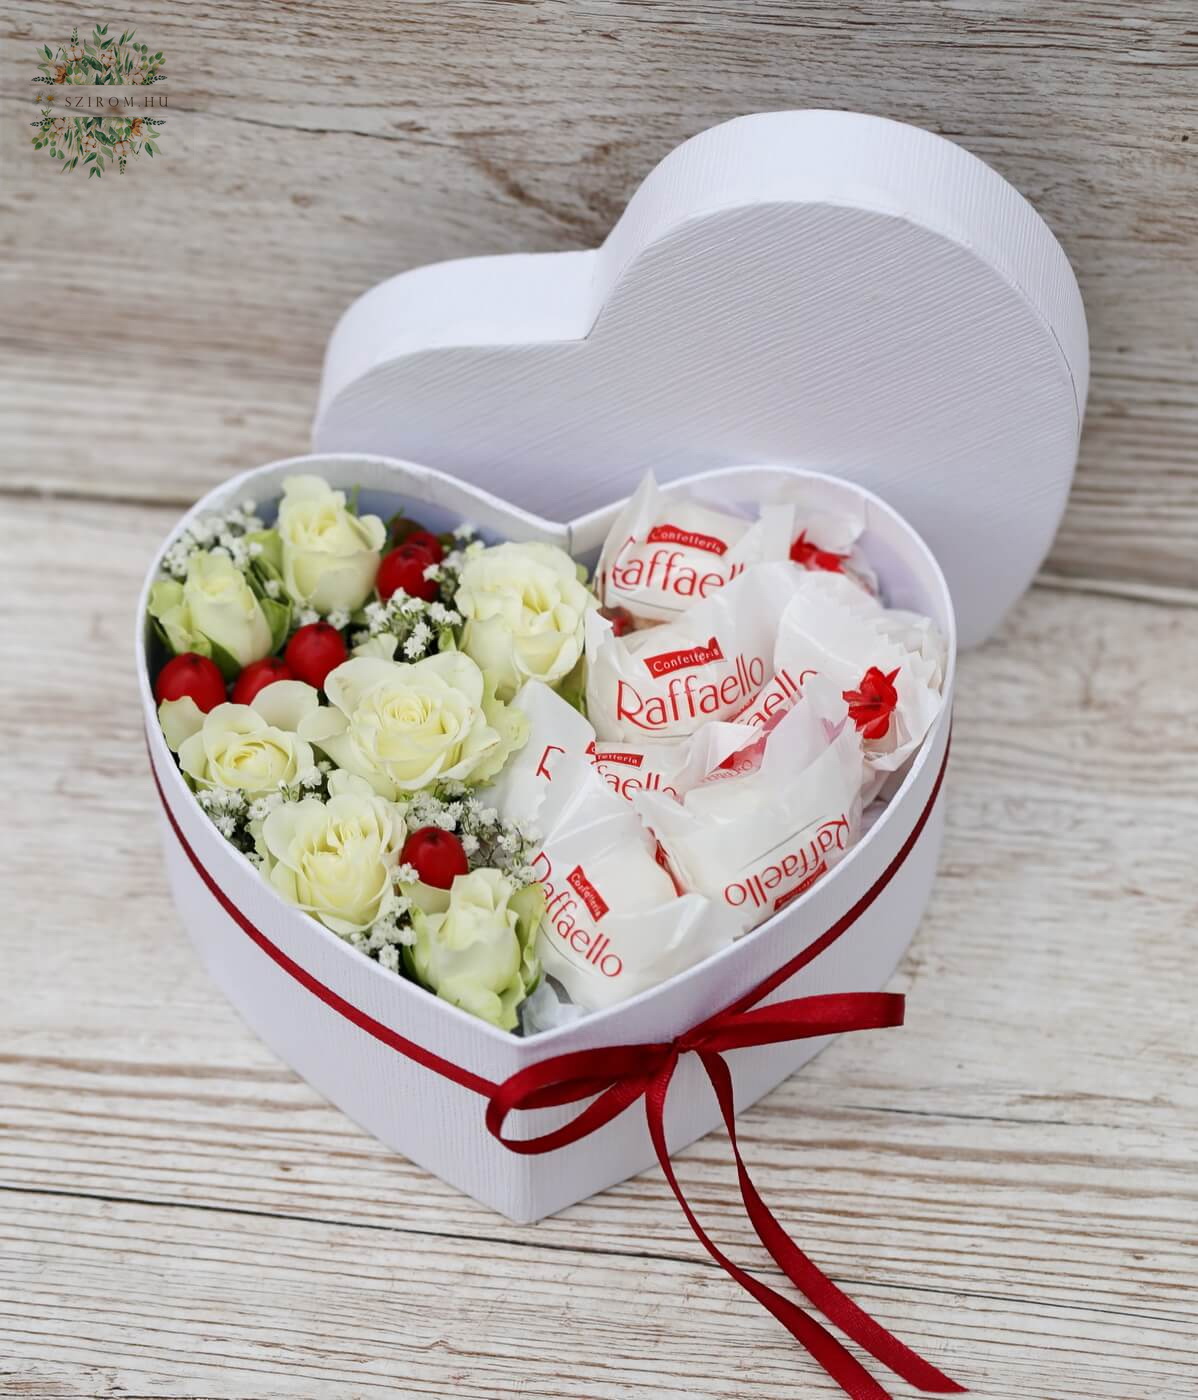 flower delivery Budapest - Small heart box with white spray mini roses, raffaello chocolate